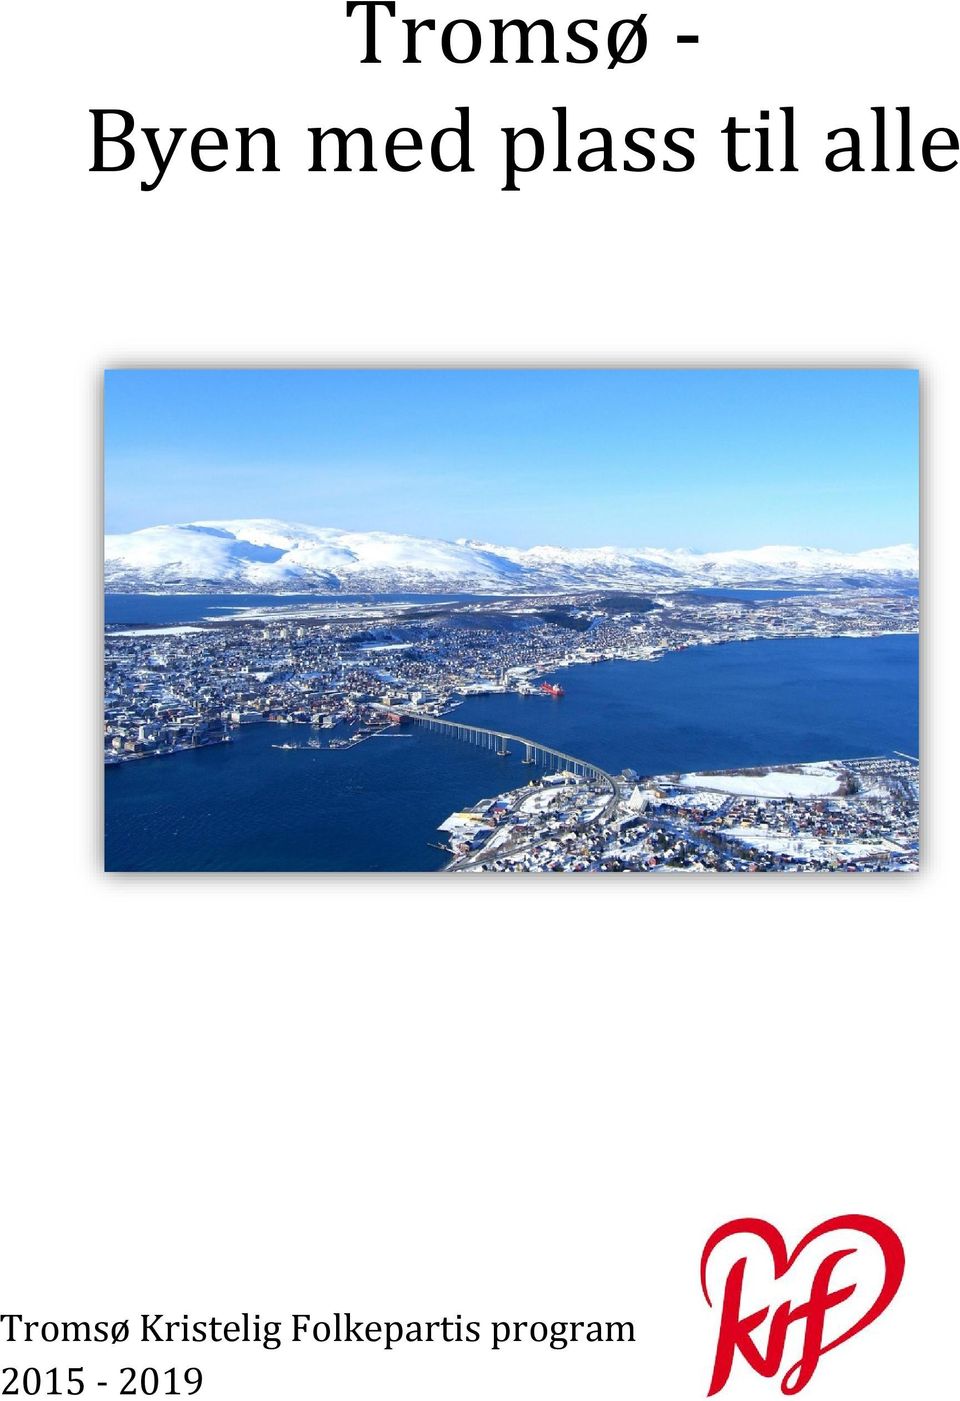 Tromsø Kristelig